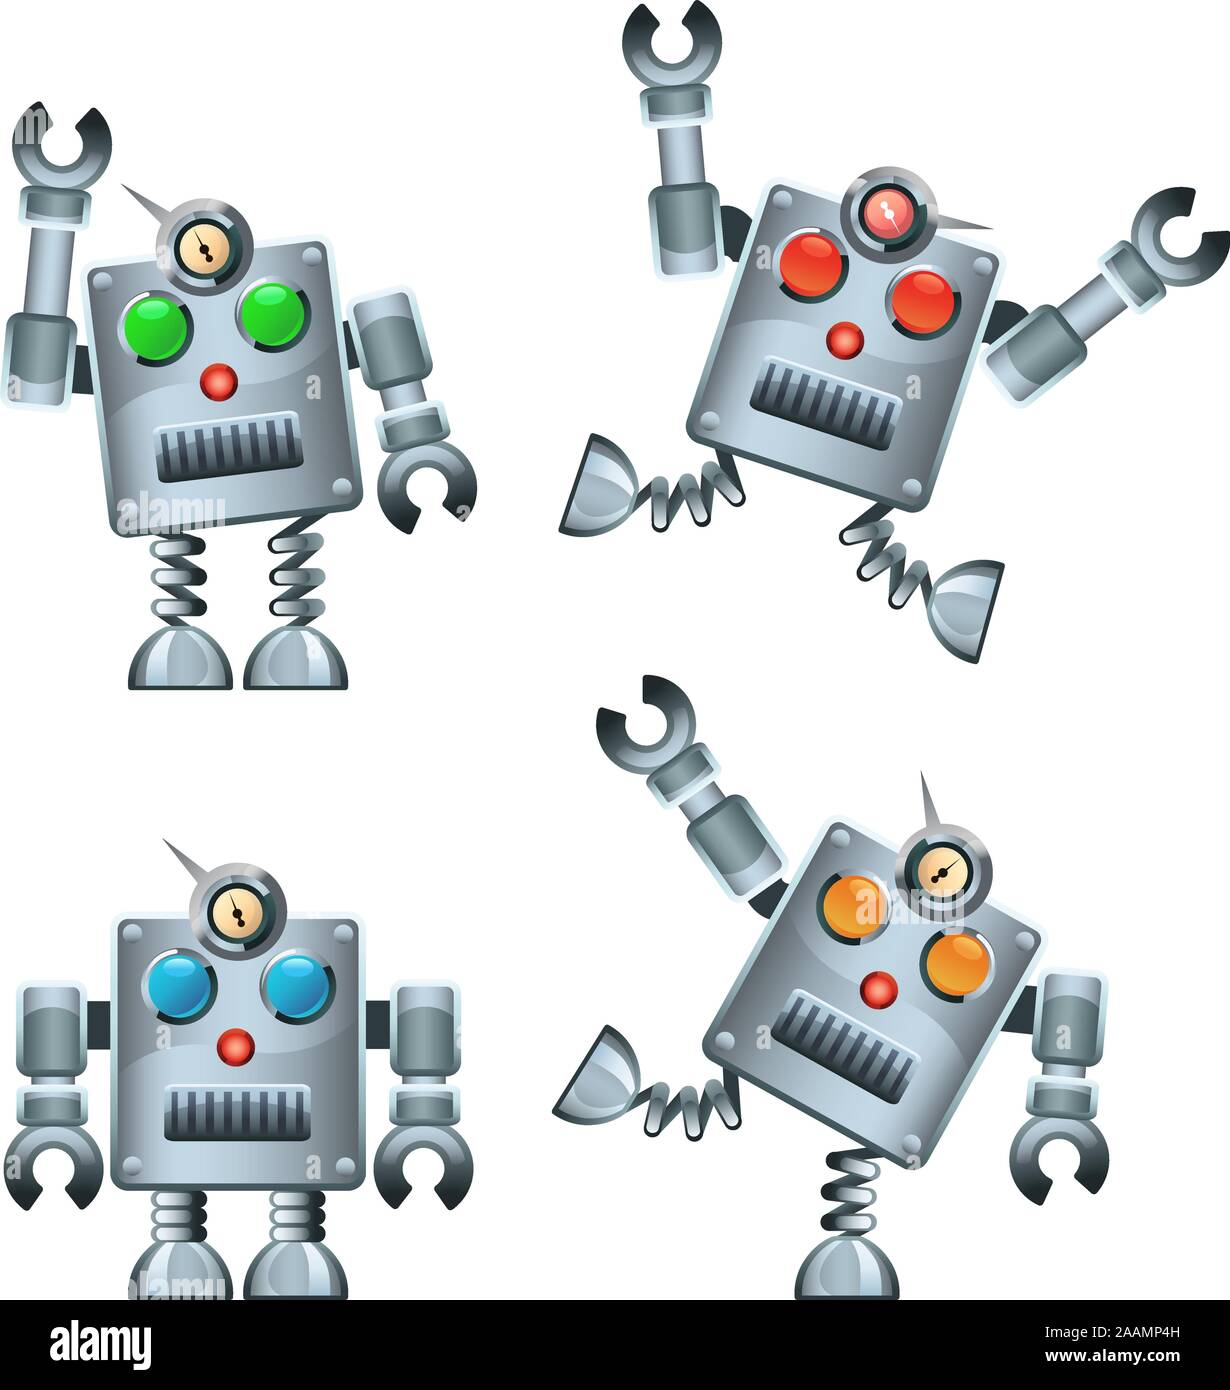 Retro Silver Robot Set vector illustration. Stock Vector